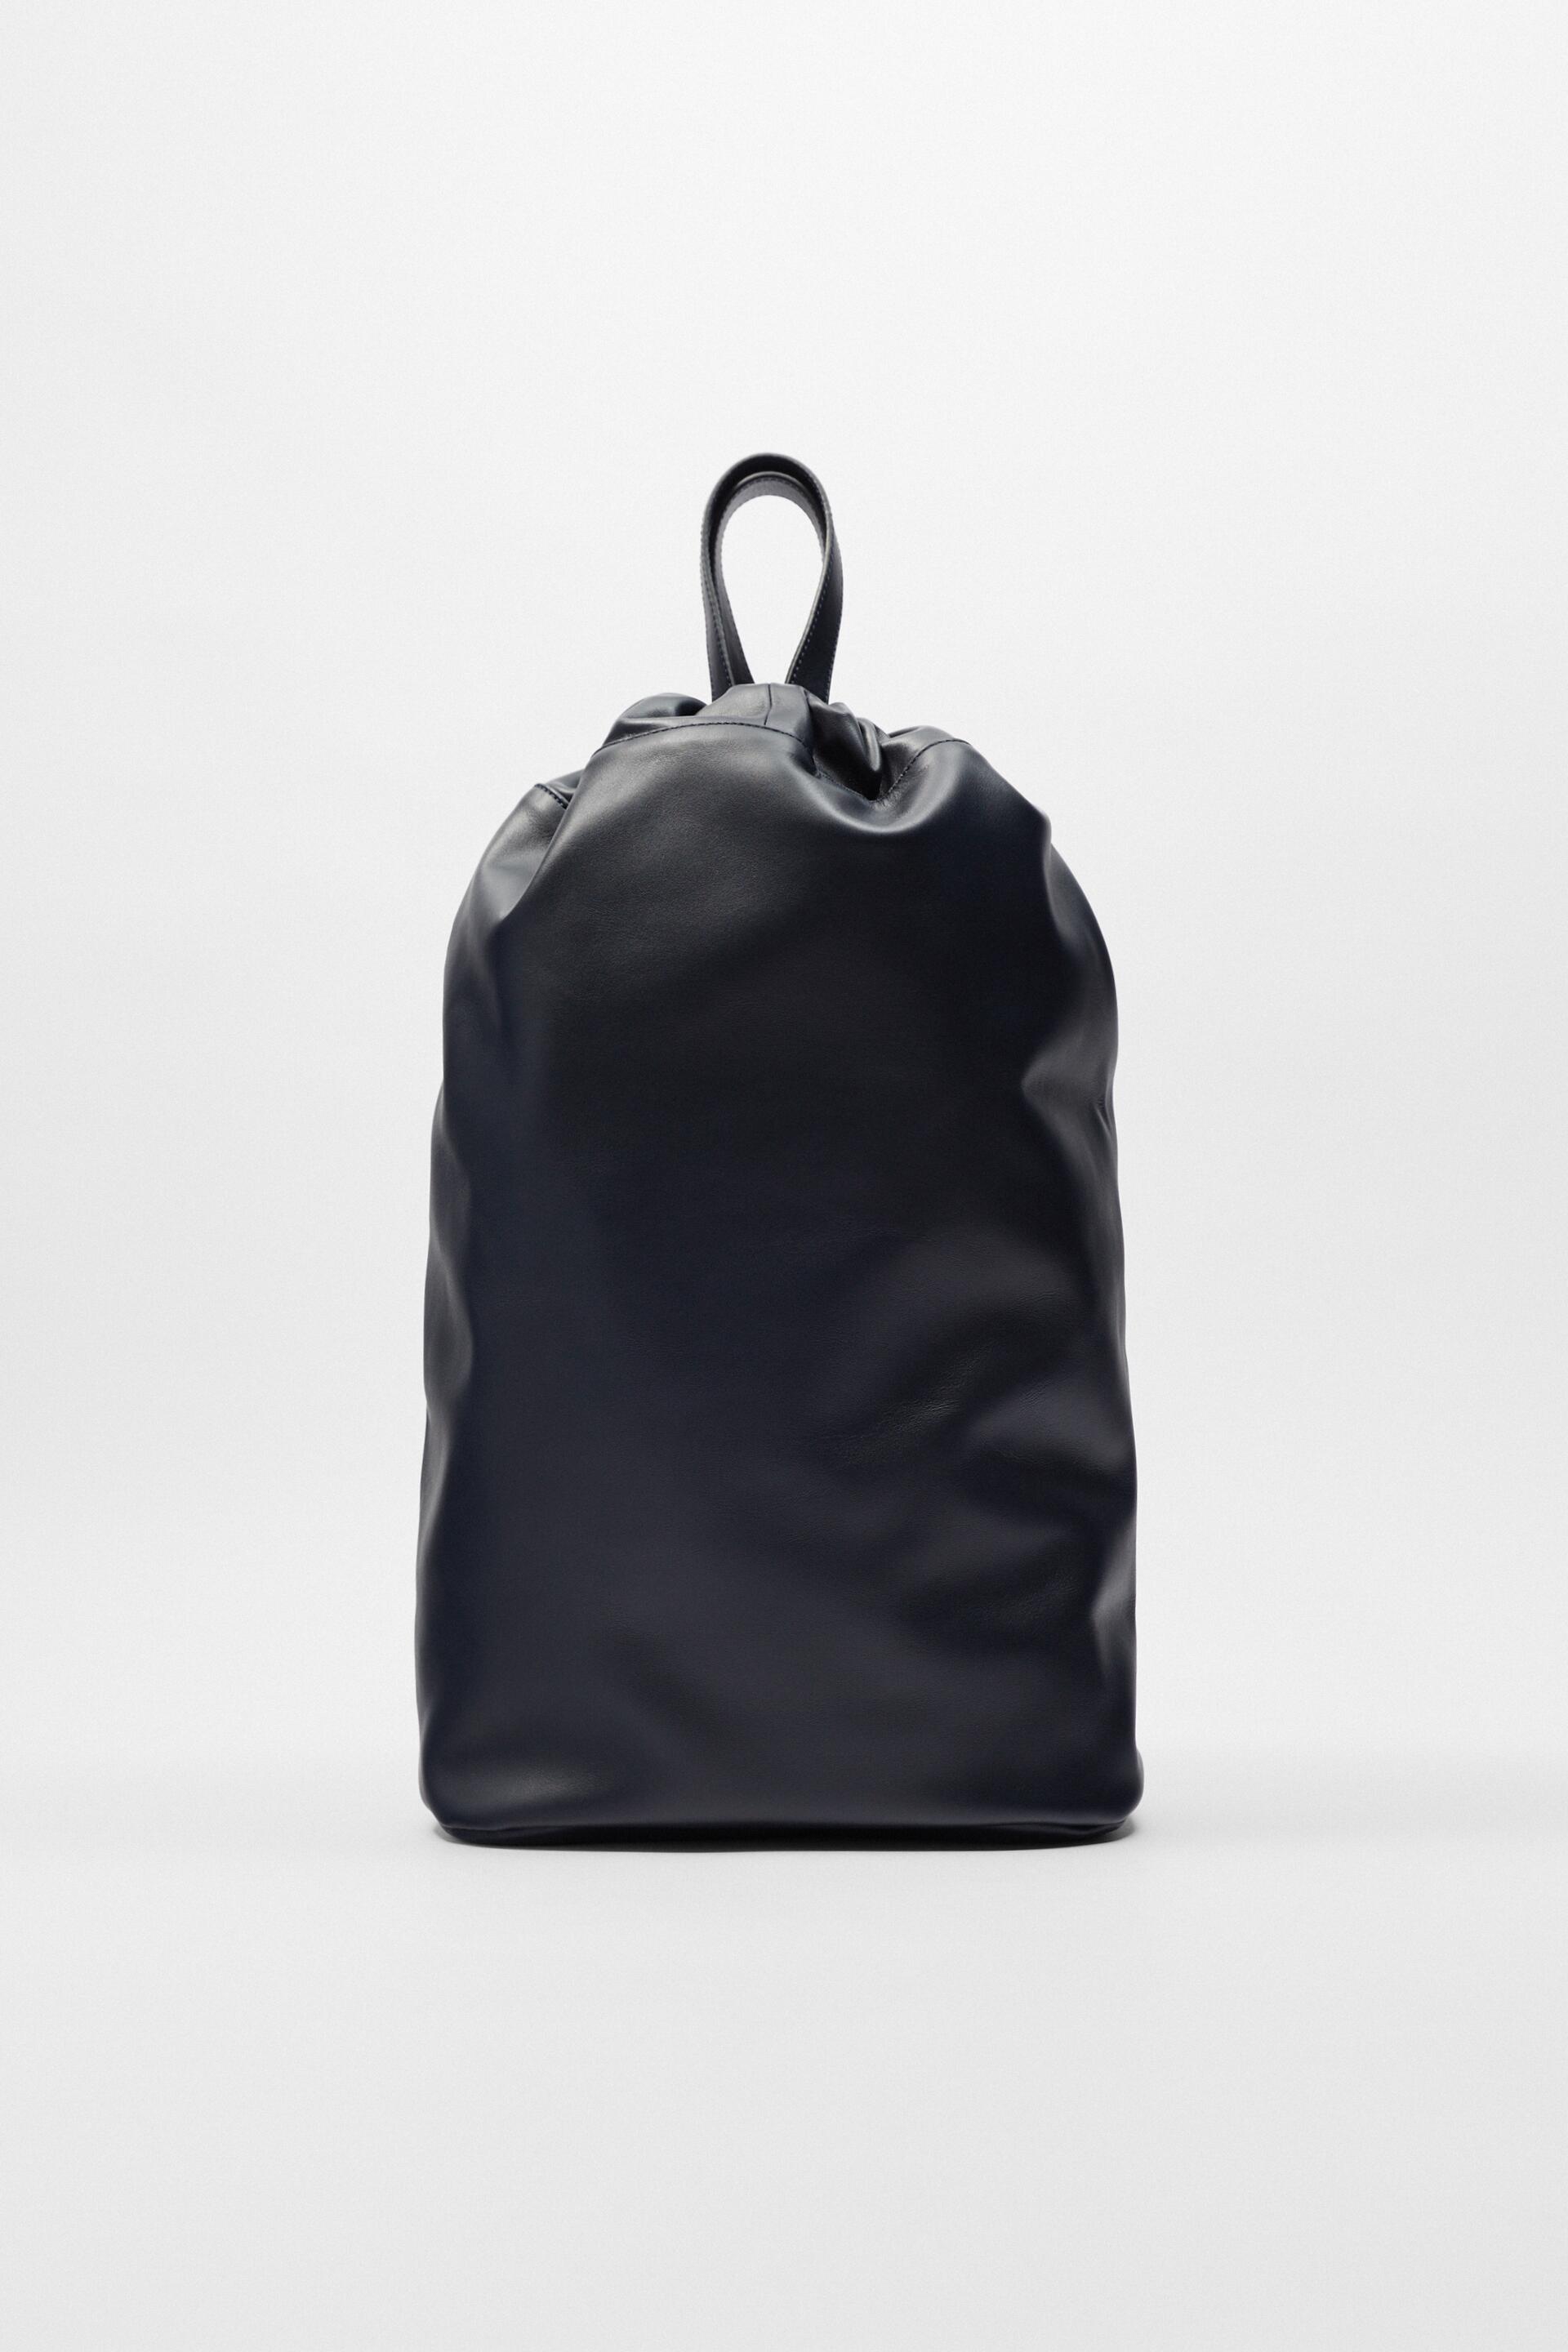 Zara Javier S. Medina® Leather Backpack - Big Apple Buddy